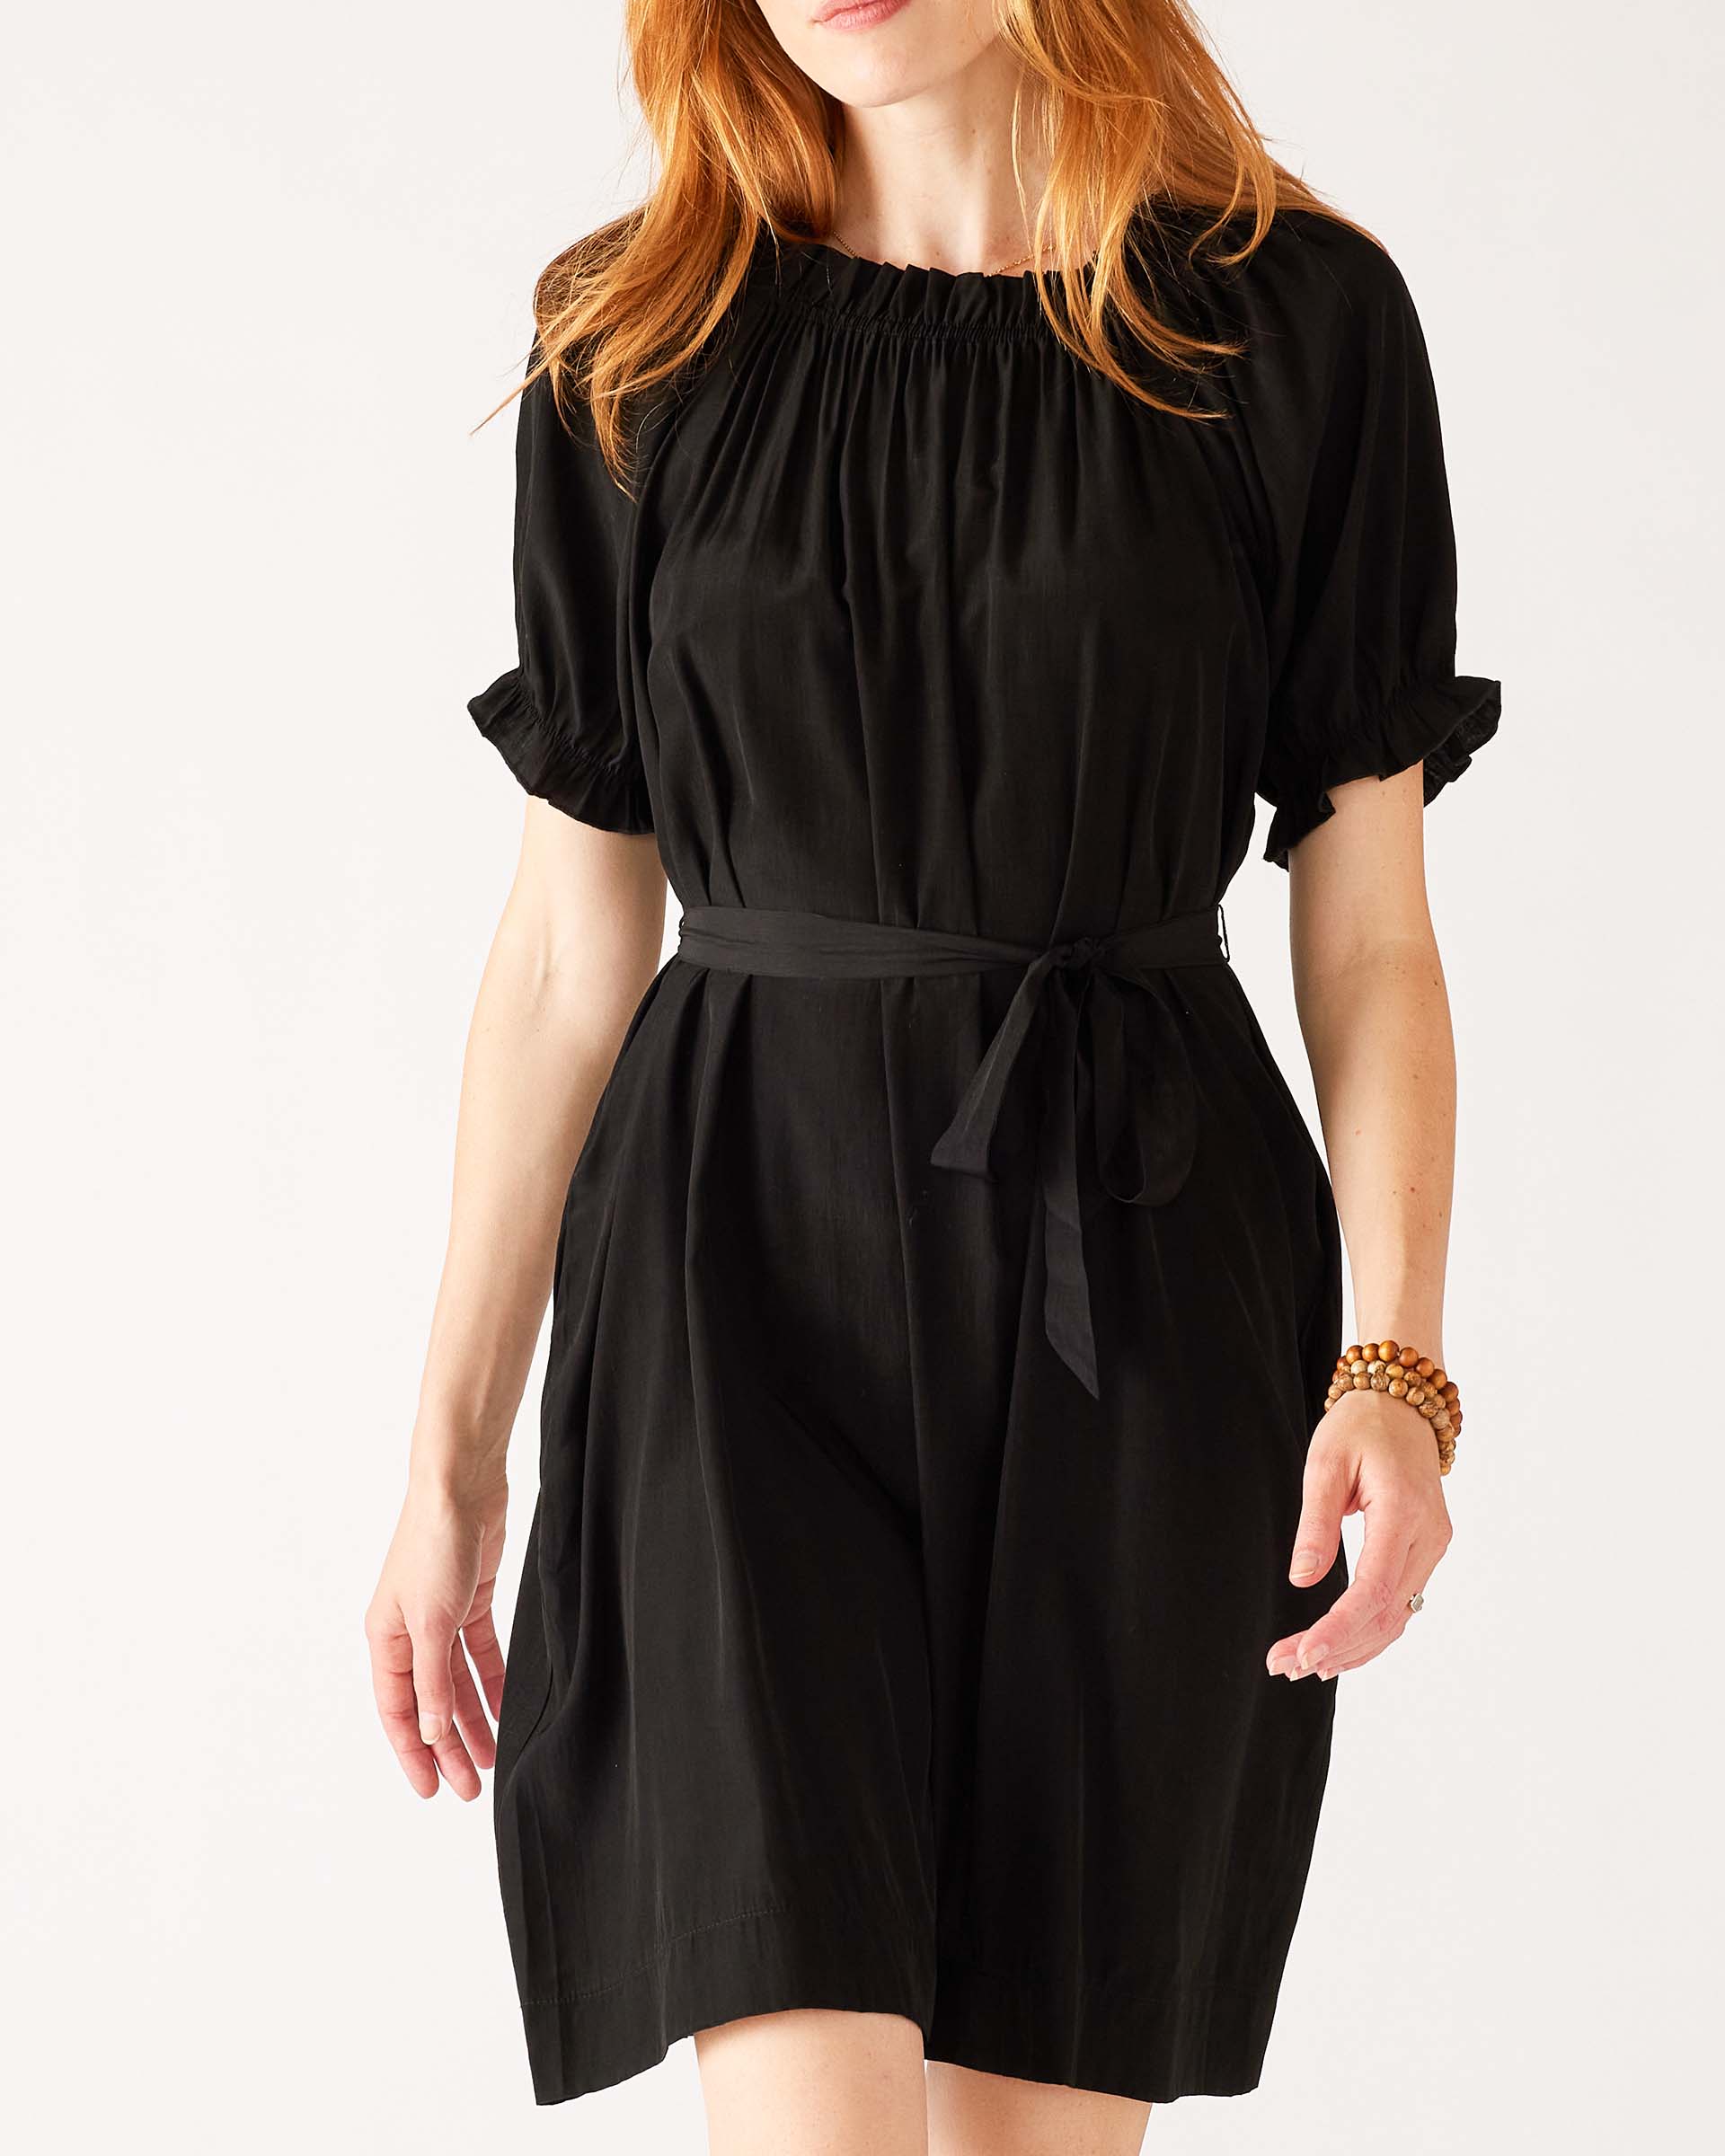 Women's Black Ruffled Shoulder Midi Dress Front View